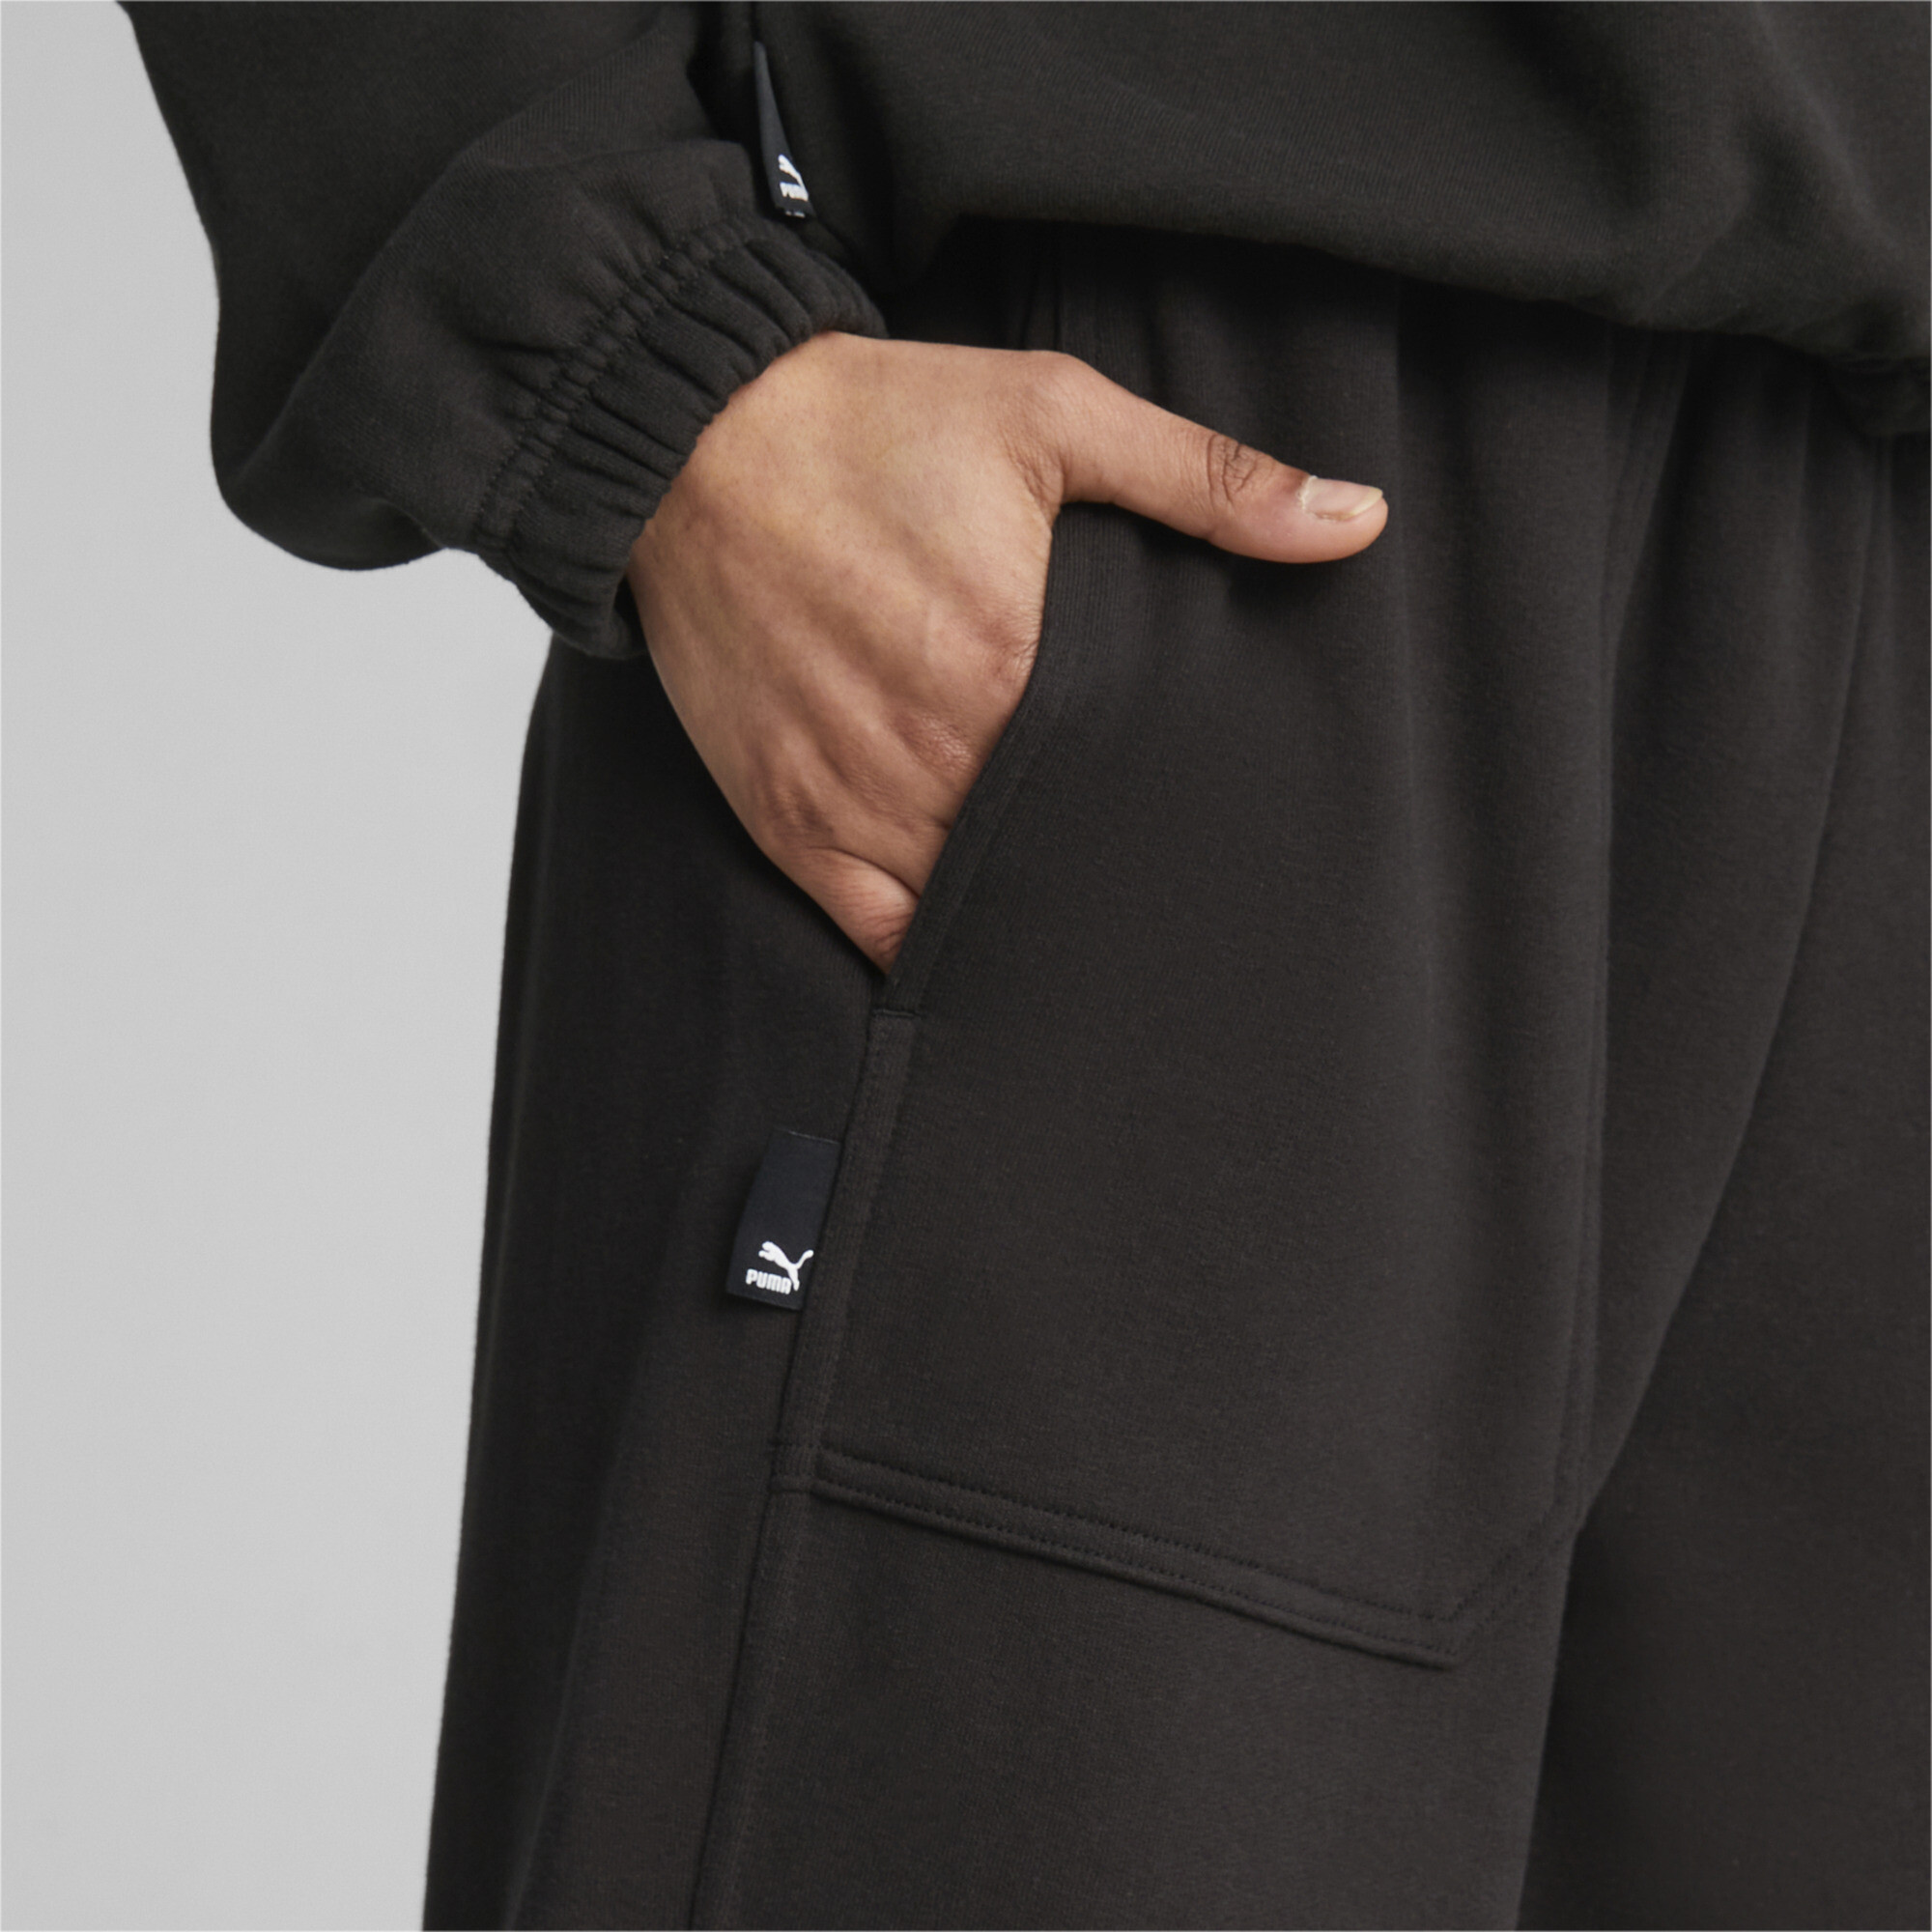 Women's PUMA DOWNTOWN Sweatpants In Black, Size Small